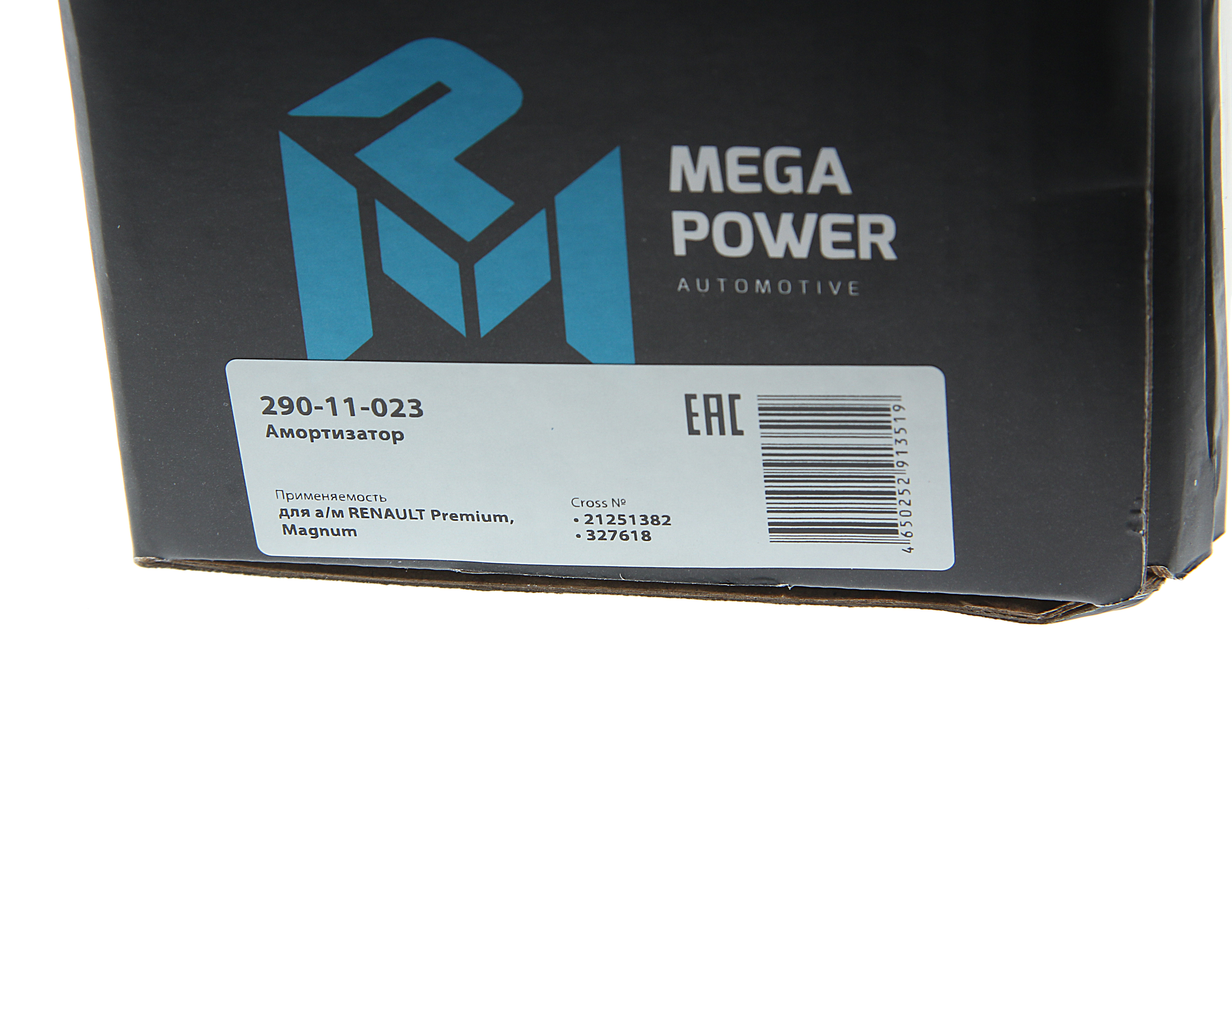 Амортизатор RENAULT Premium,Magnum задний (520/865 20x55 20x62 О/O), 290-11-023, MEGAPOWER